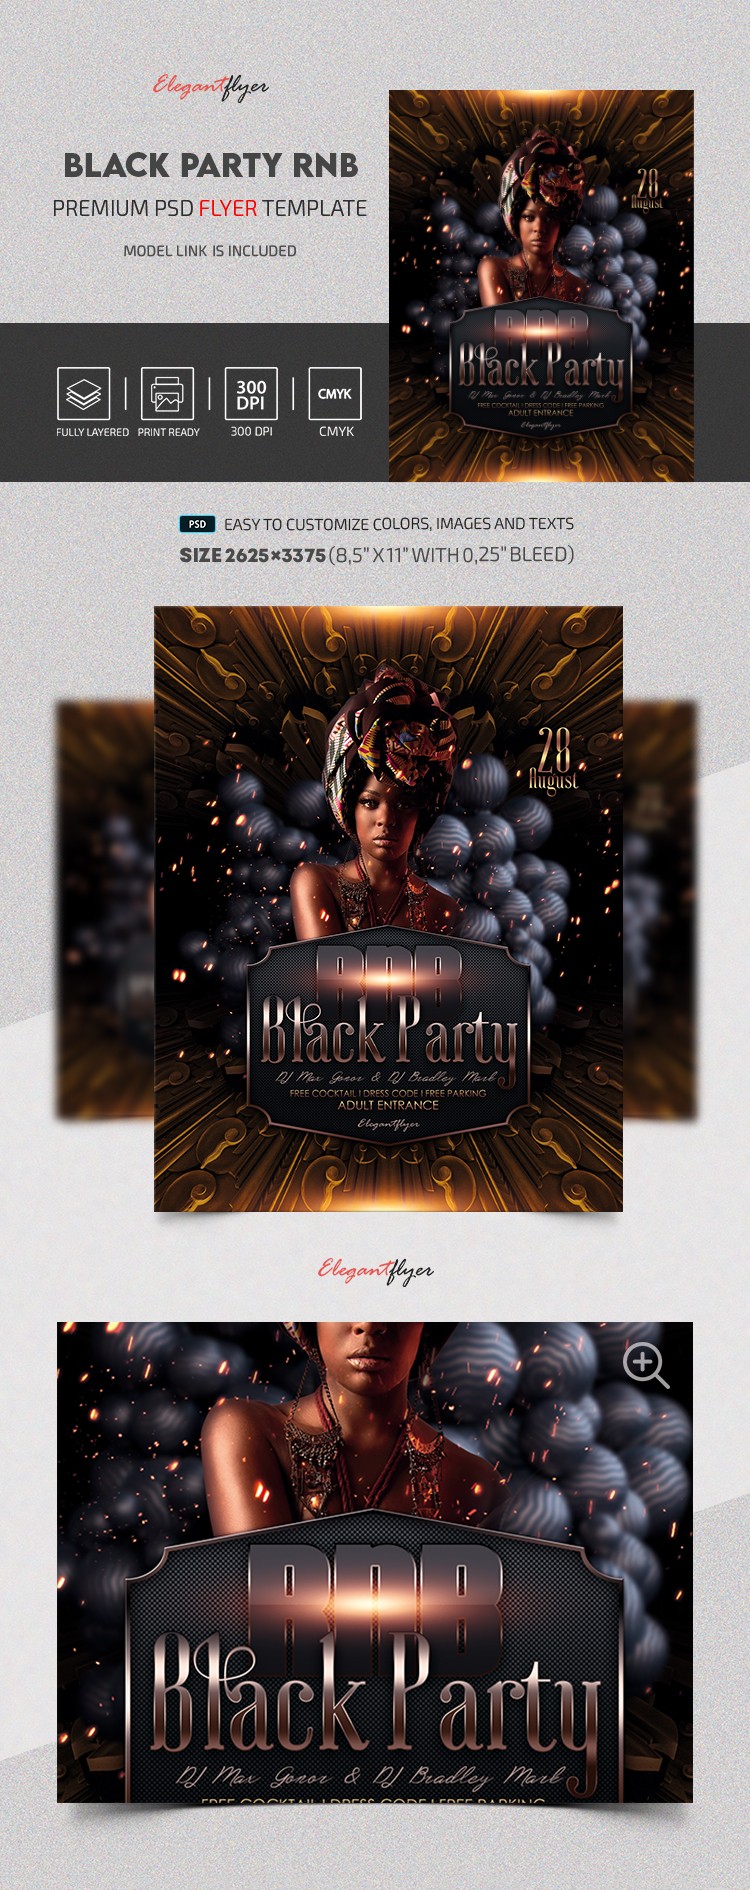 Black Party RnB Flyer by ElegantFlyer